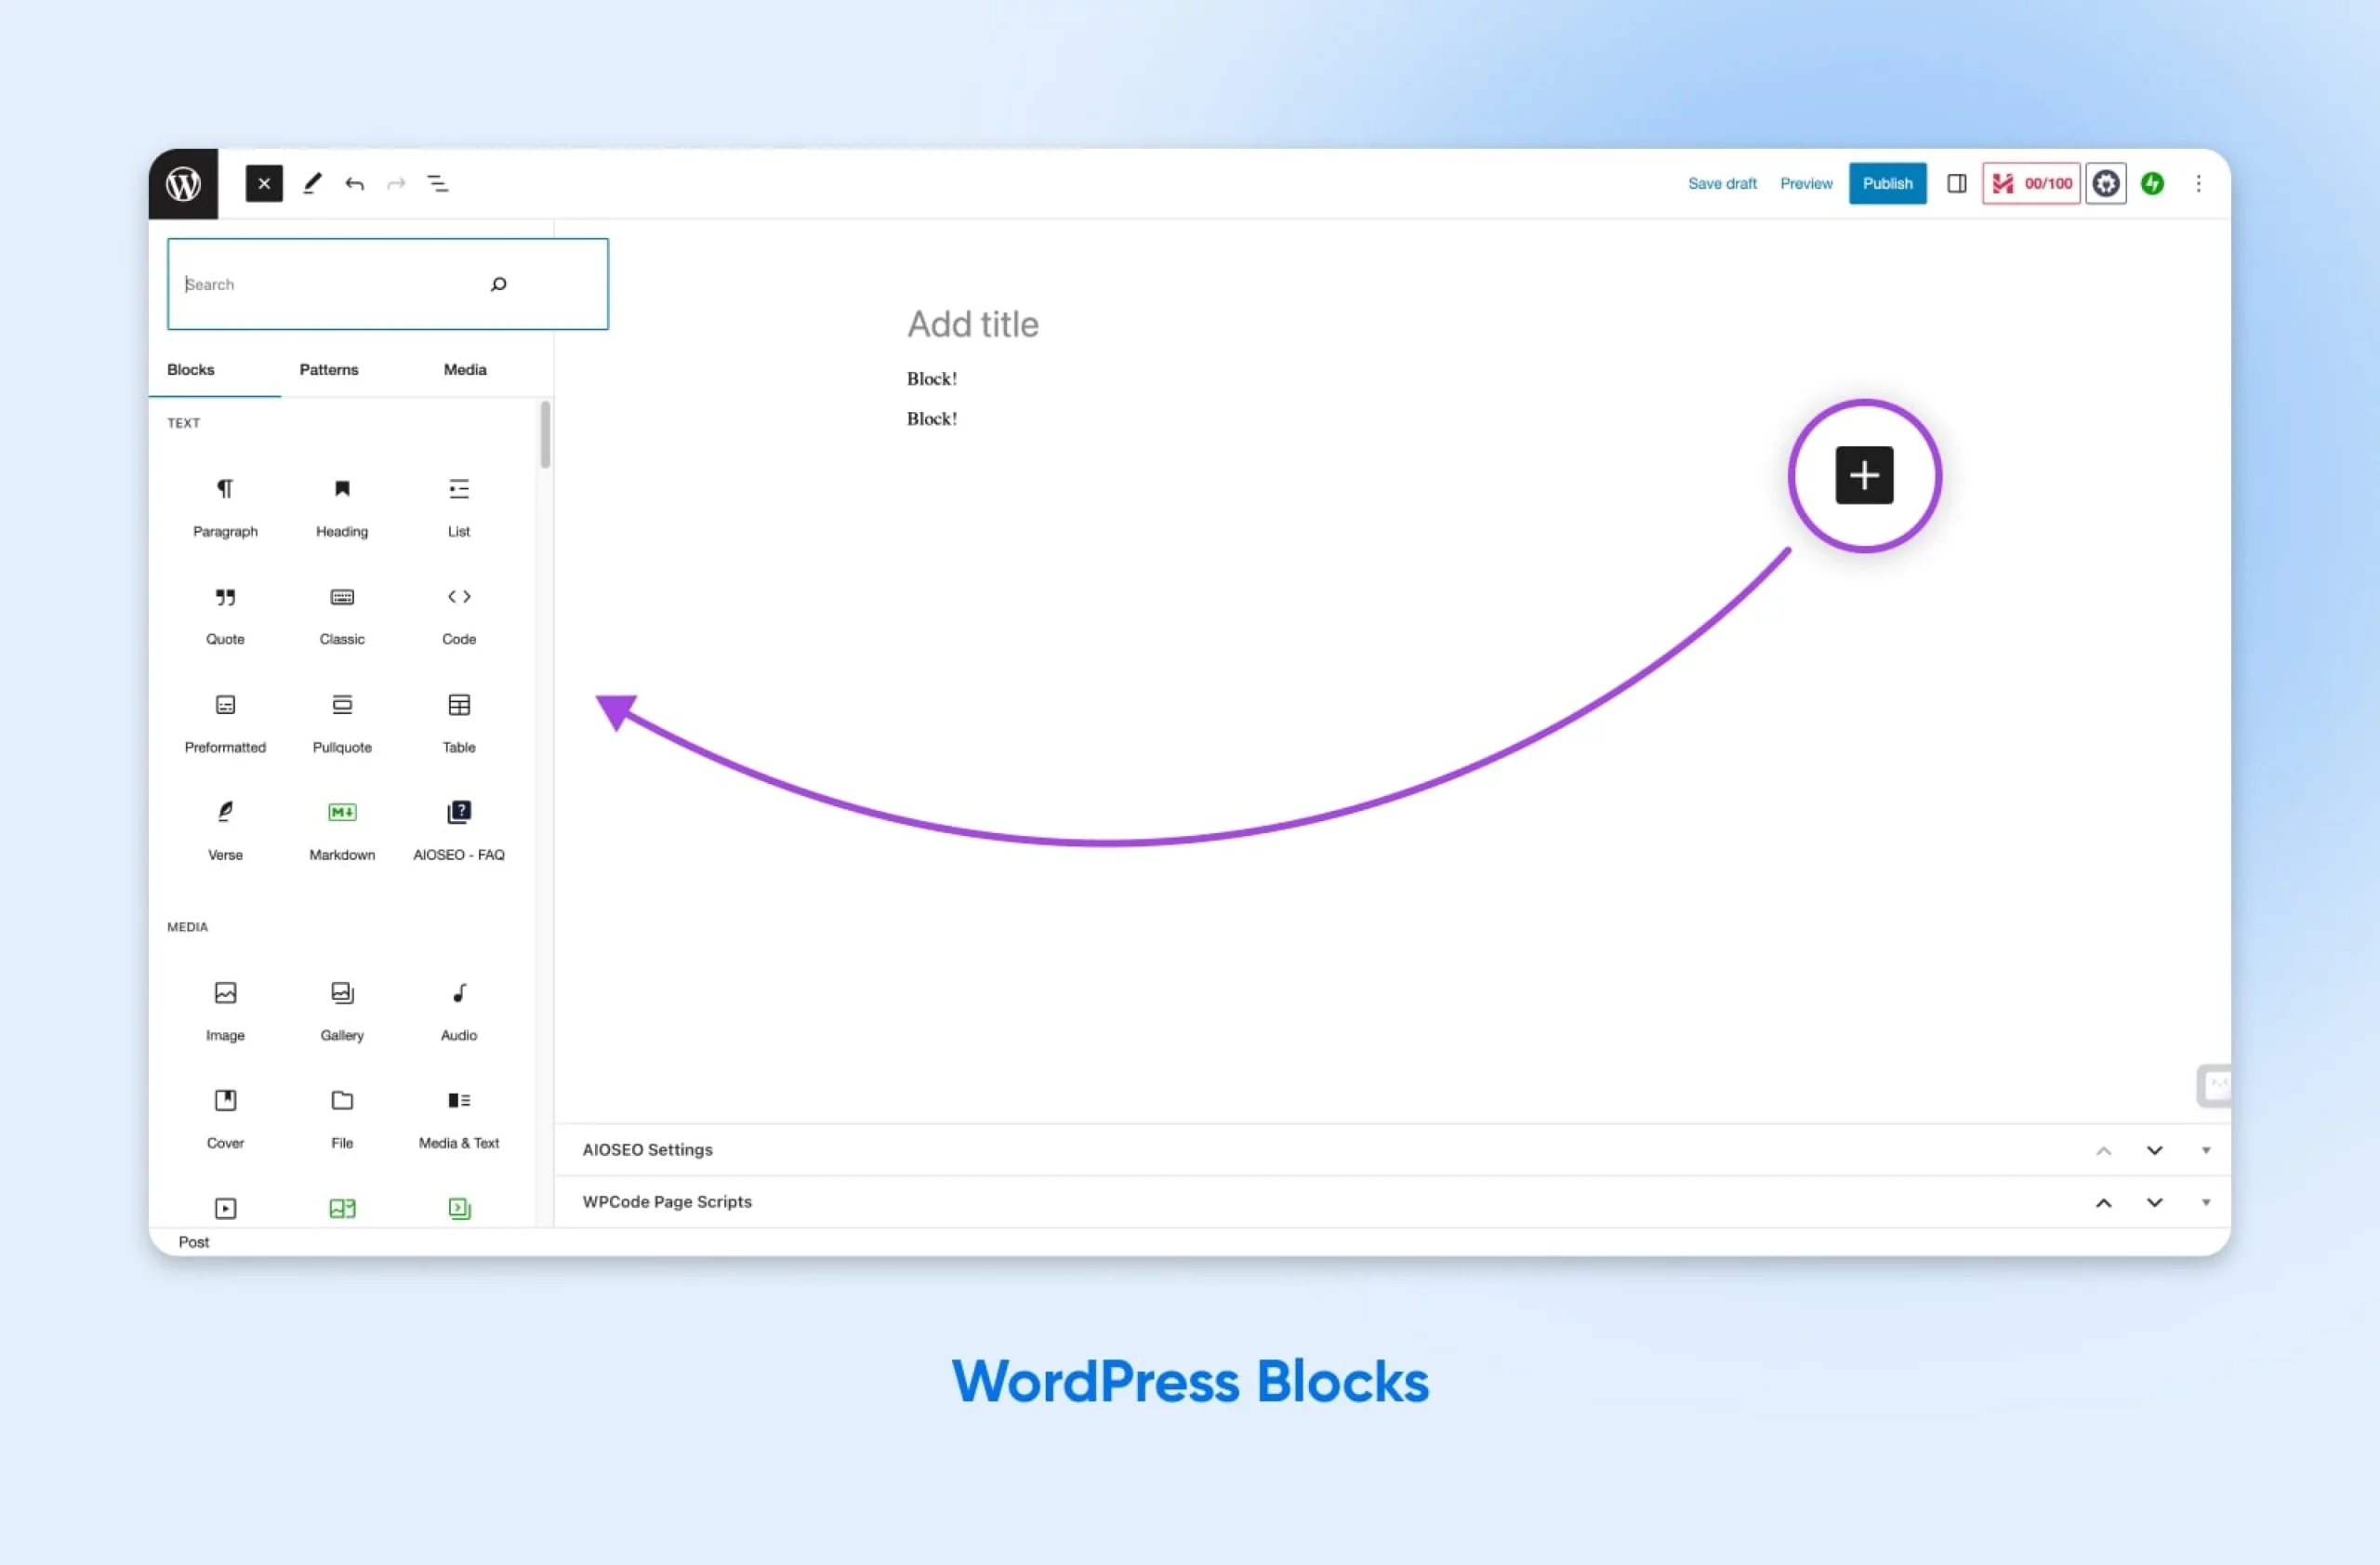 Purple arrow points to WordPress blocks on the left of the screen